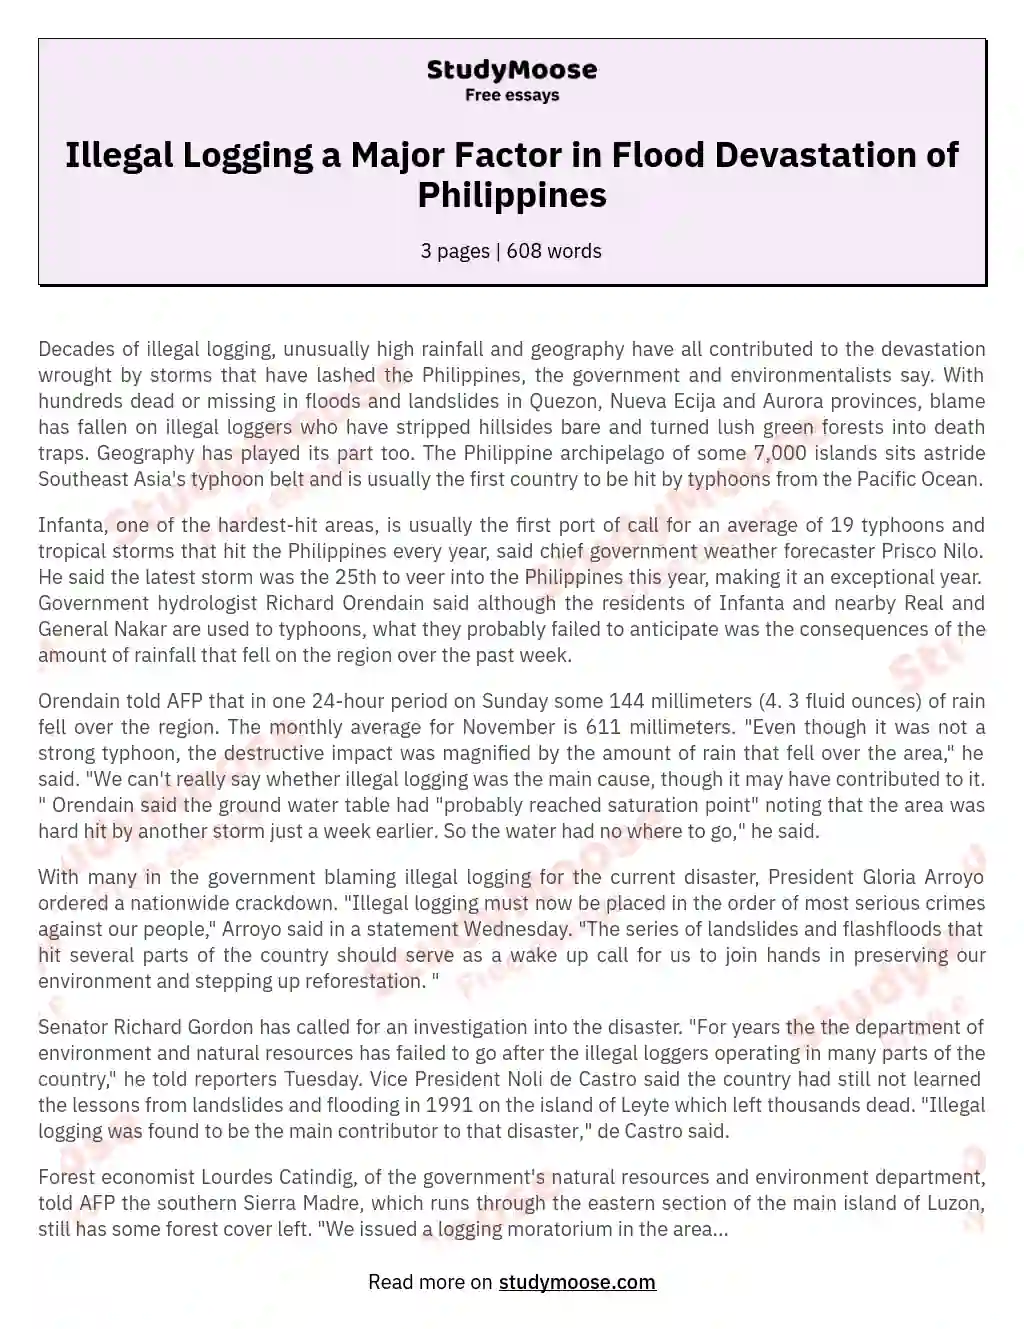 Illegal Logging a Major Factor in Flood Devastation of Philippines essay